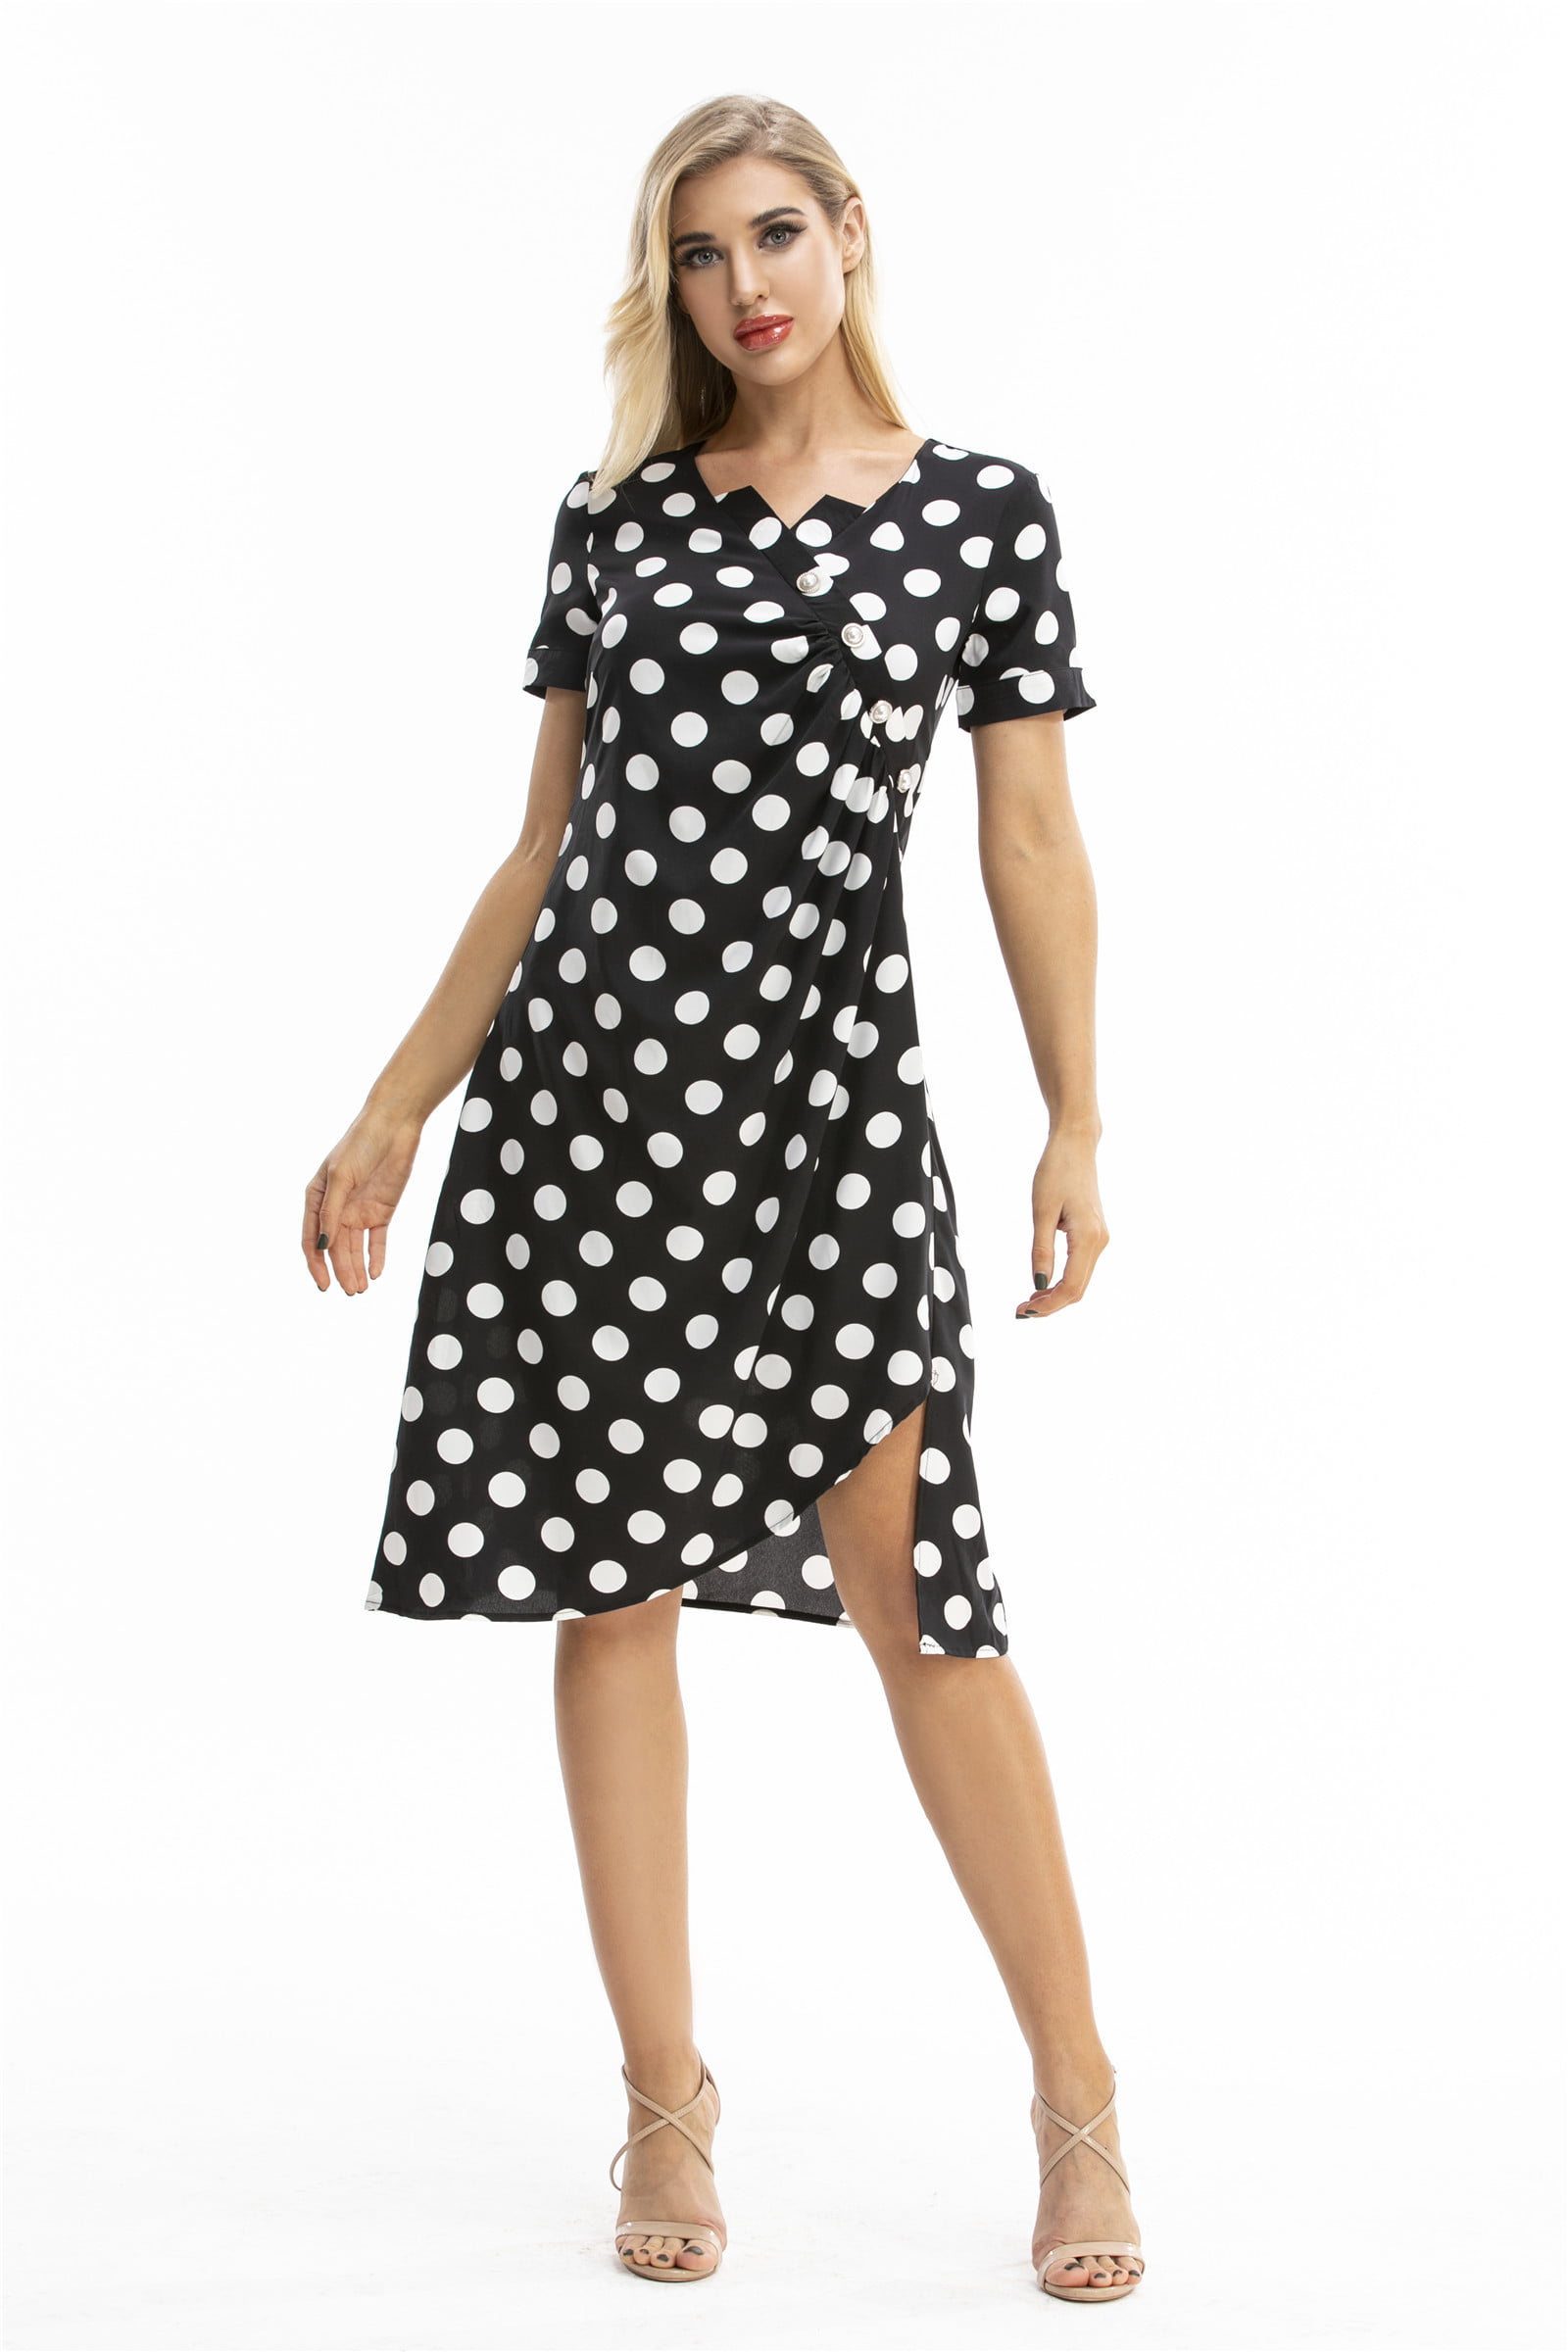 TOP SHE - Women's Polka Dot Print Pearl Button Dresses Casual Short ...